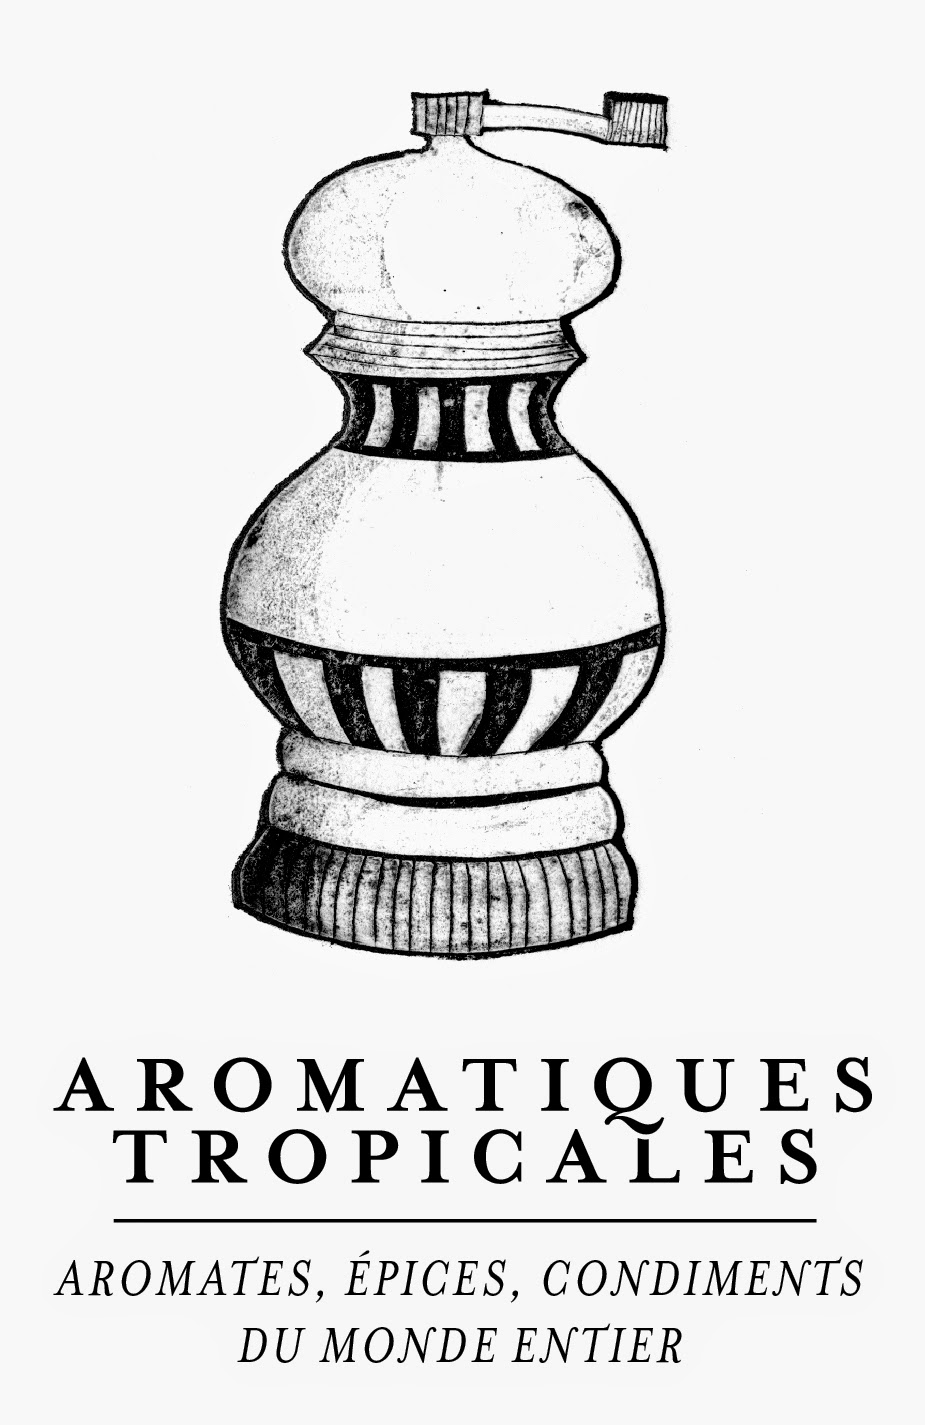 http://www.aromatiques.com/